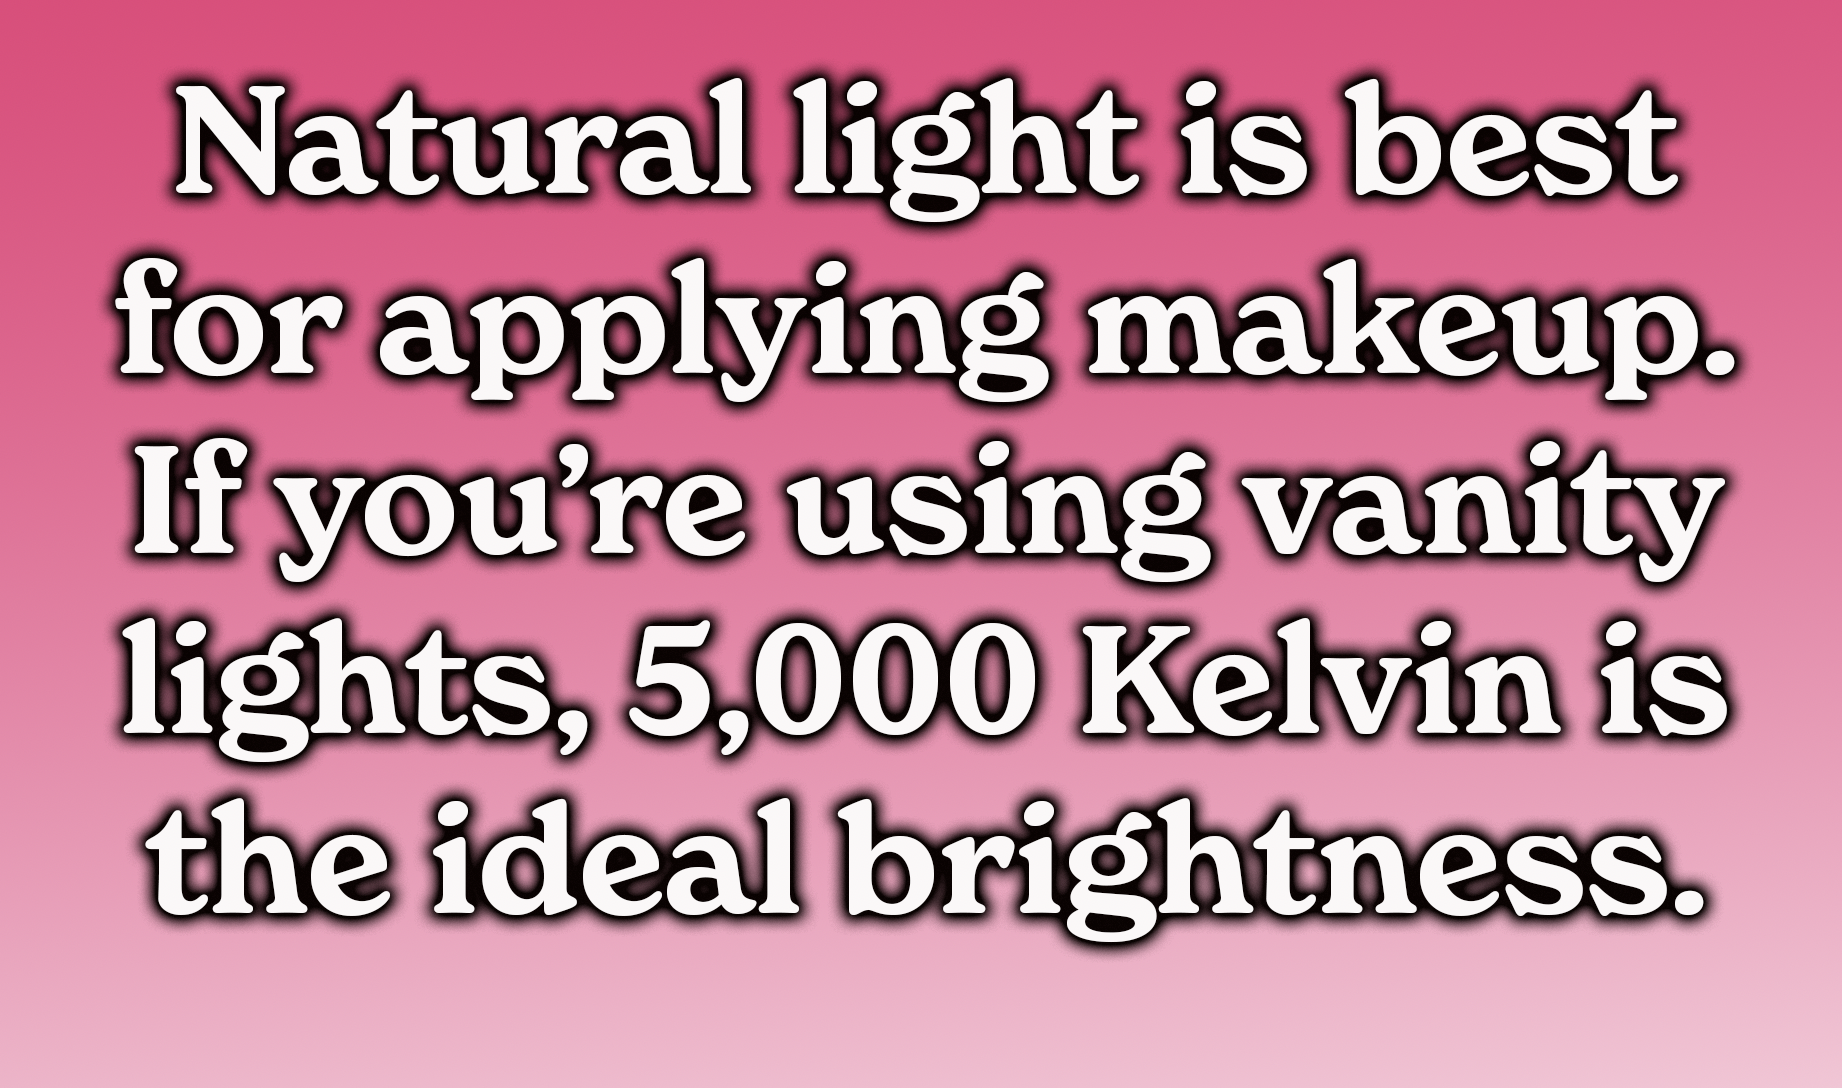 Natural light is best for applying makeup